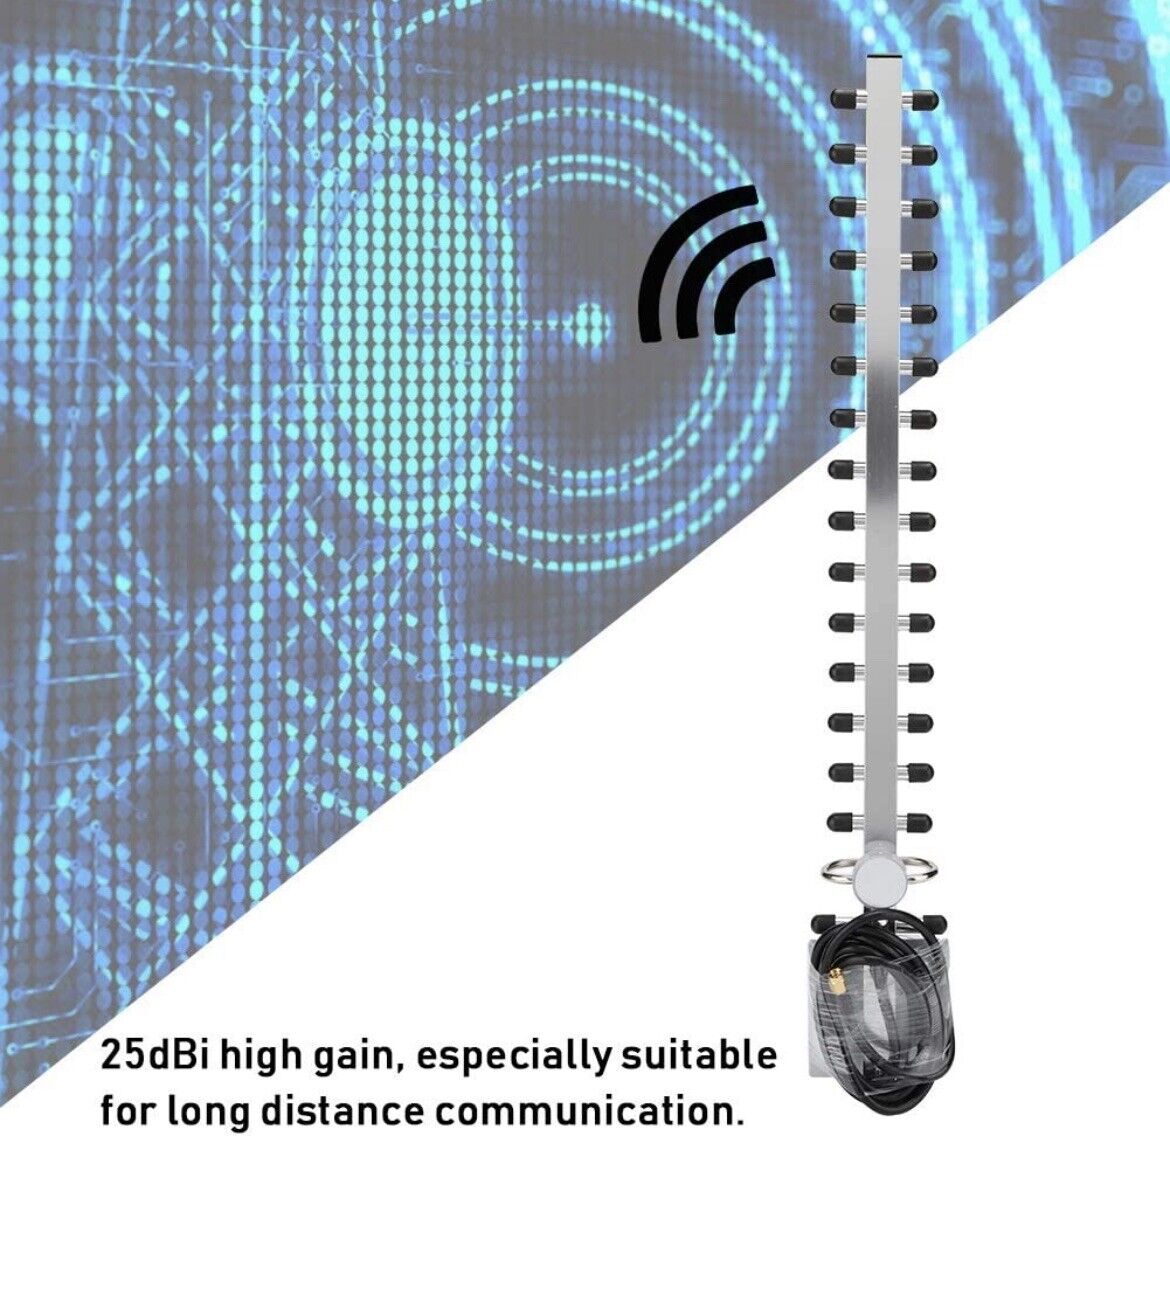 Tangxi Yagi Antenna, 2.4G 25dBi High Gain Wireless Router Network Antenna, 1....